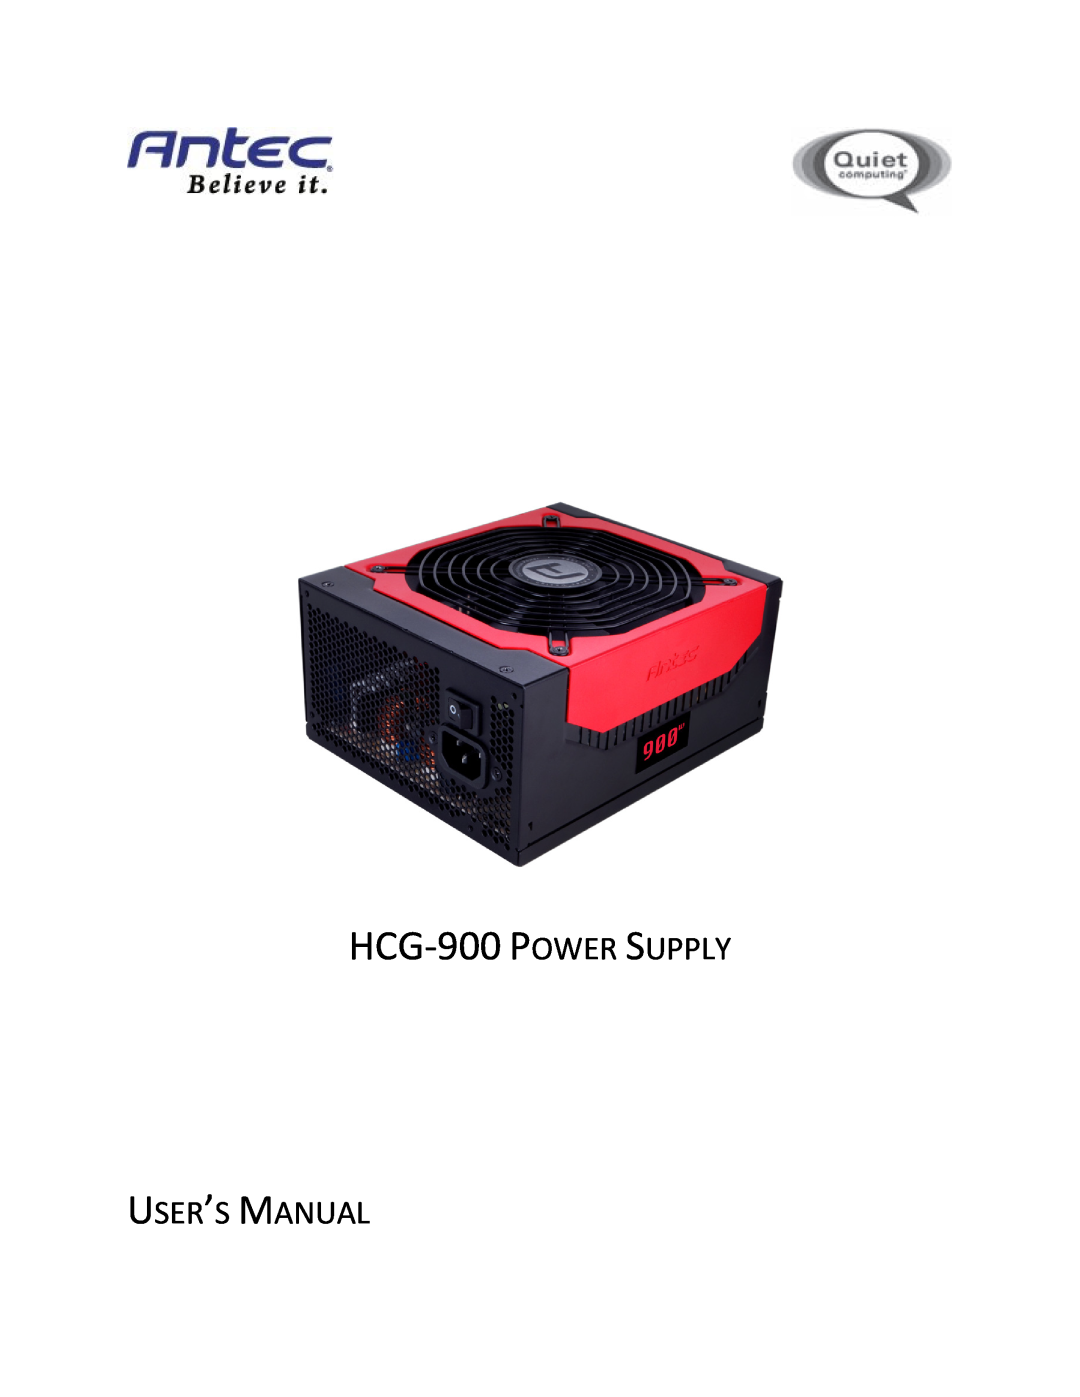 Antec user manual HCG-900 POWER SUPPLY, User’S Manual 